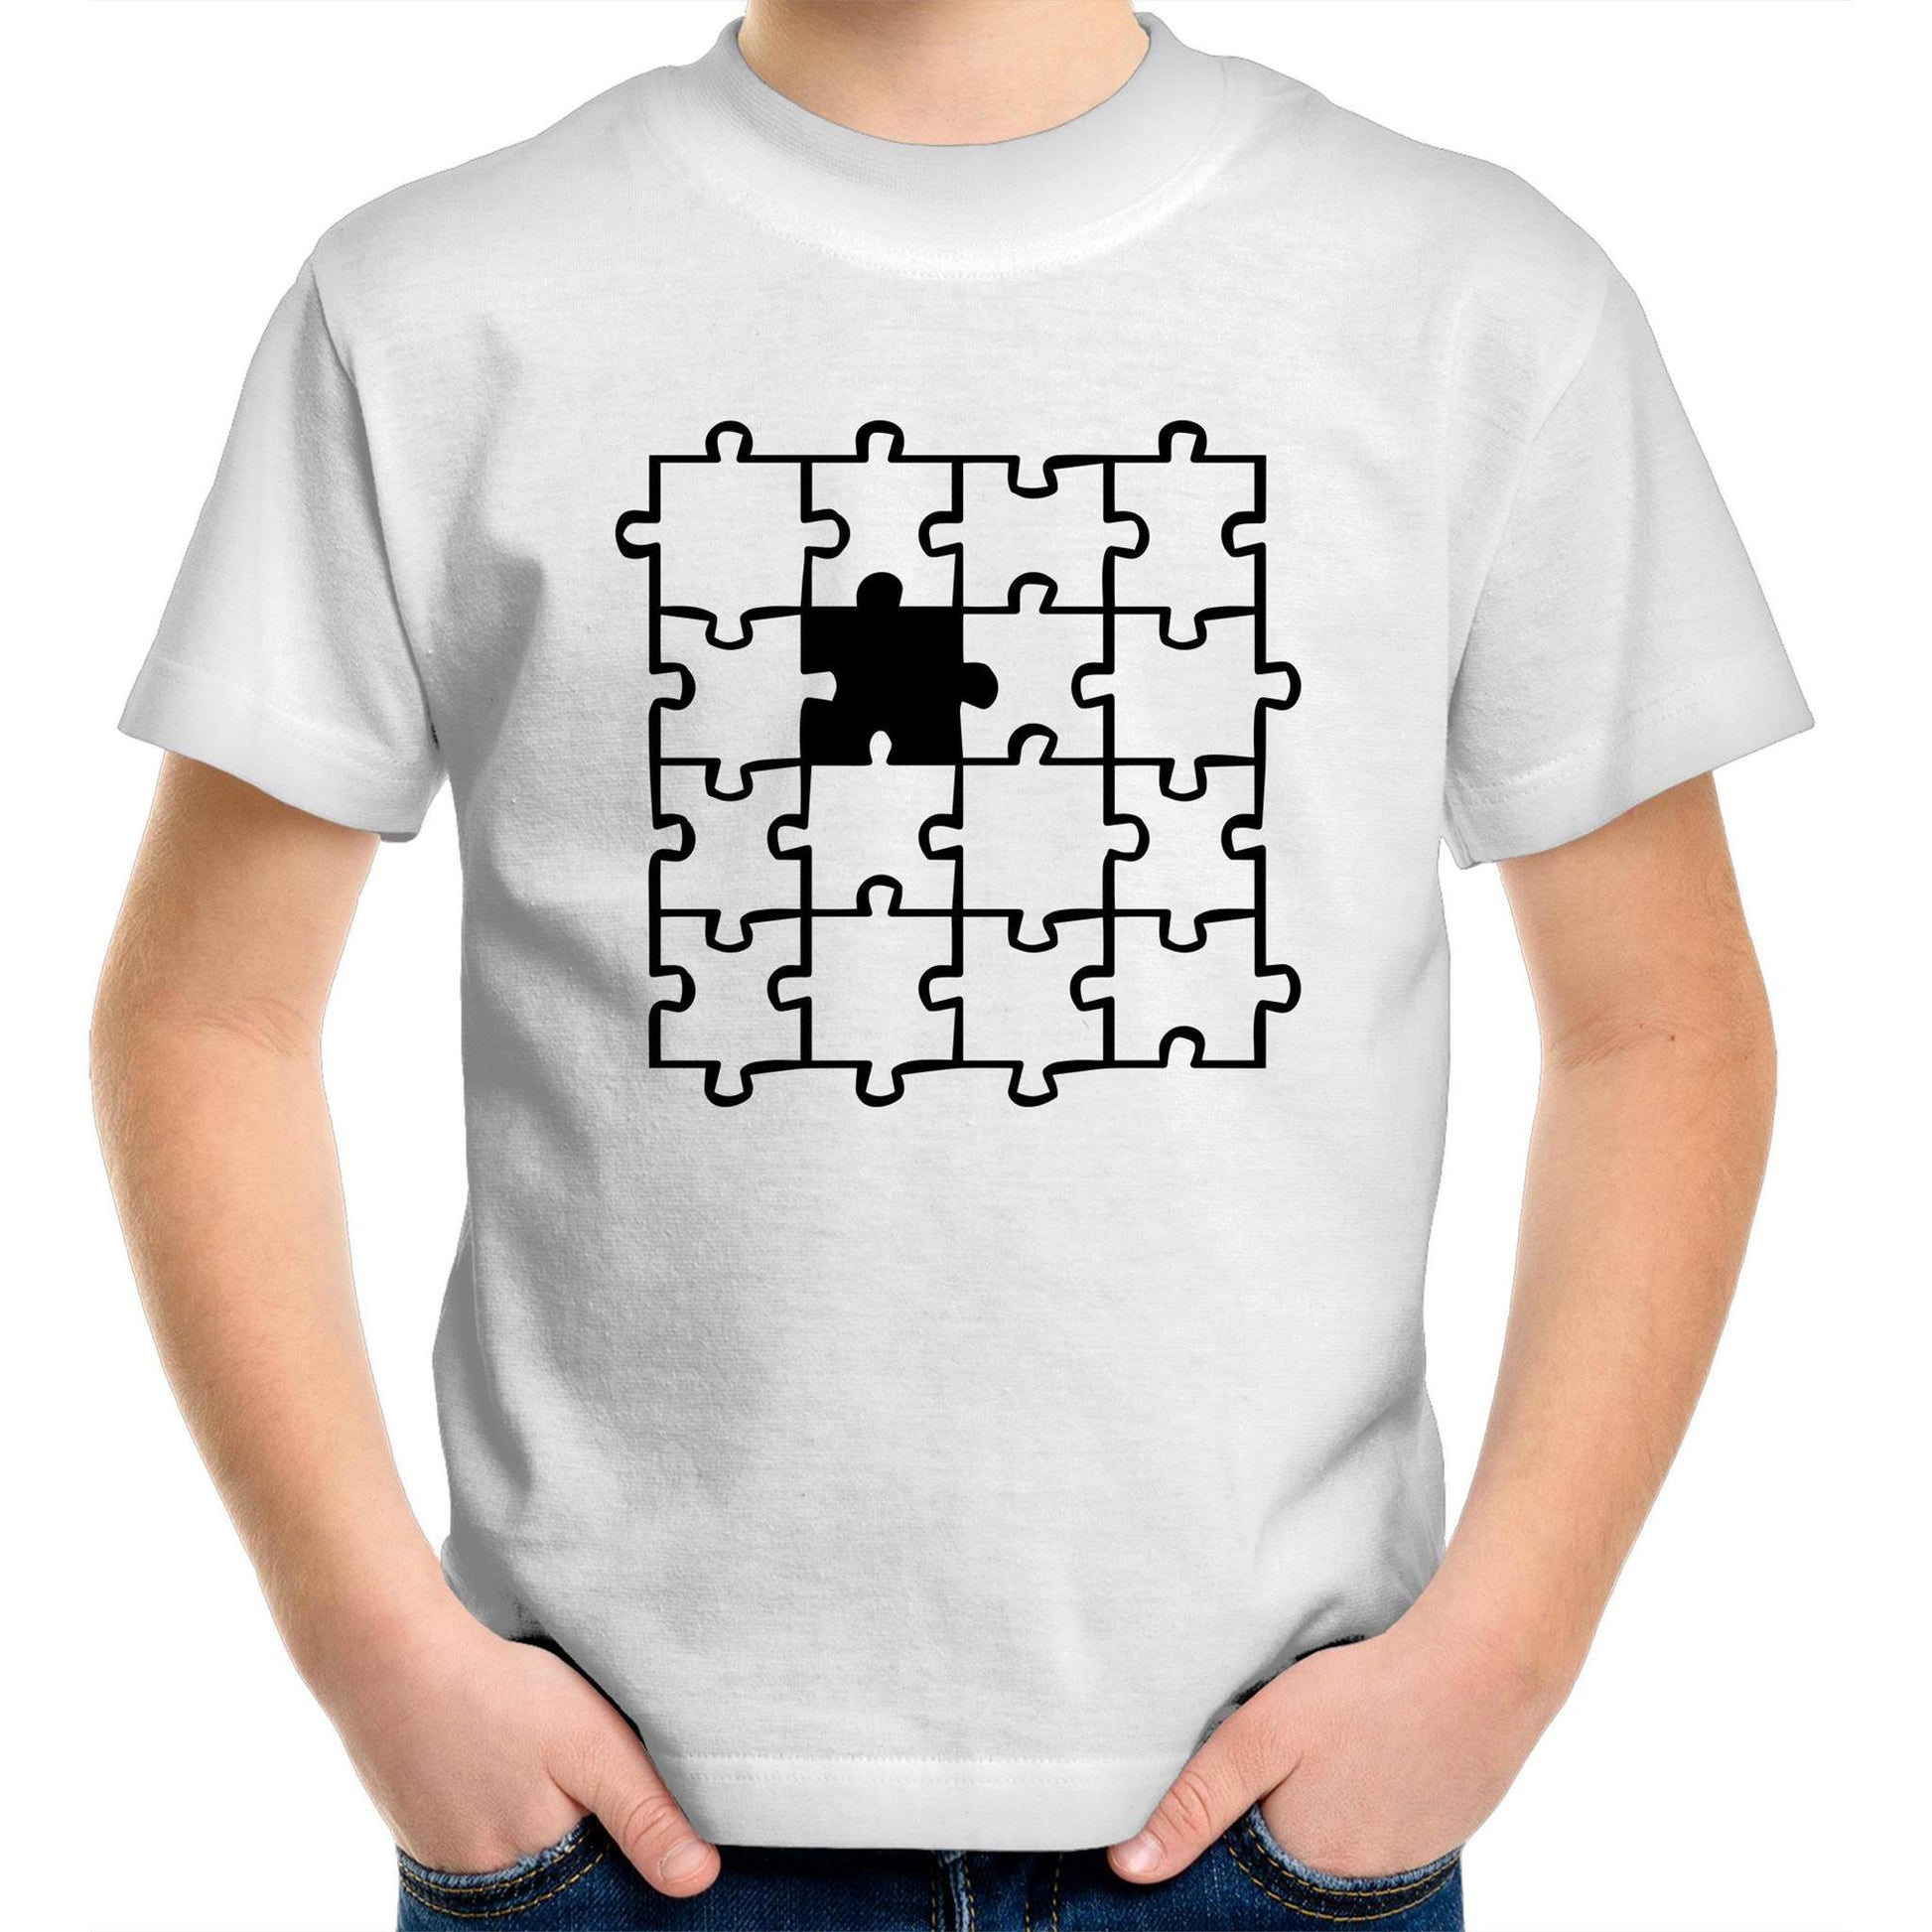 Jigsaw - Kids Youth Crew T-Shirt White Kids Youth T-shirt Games